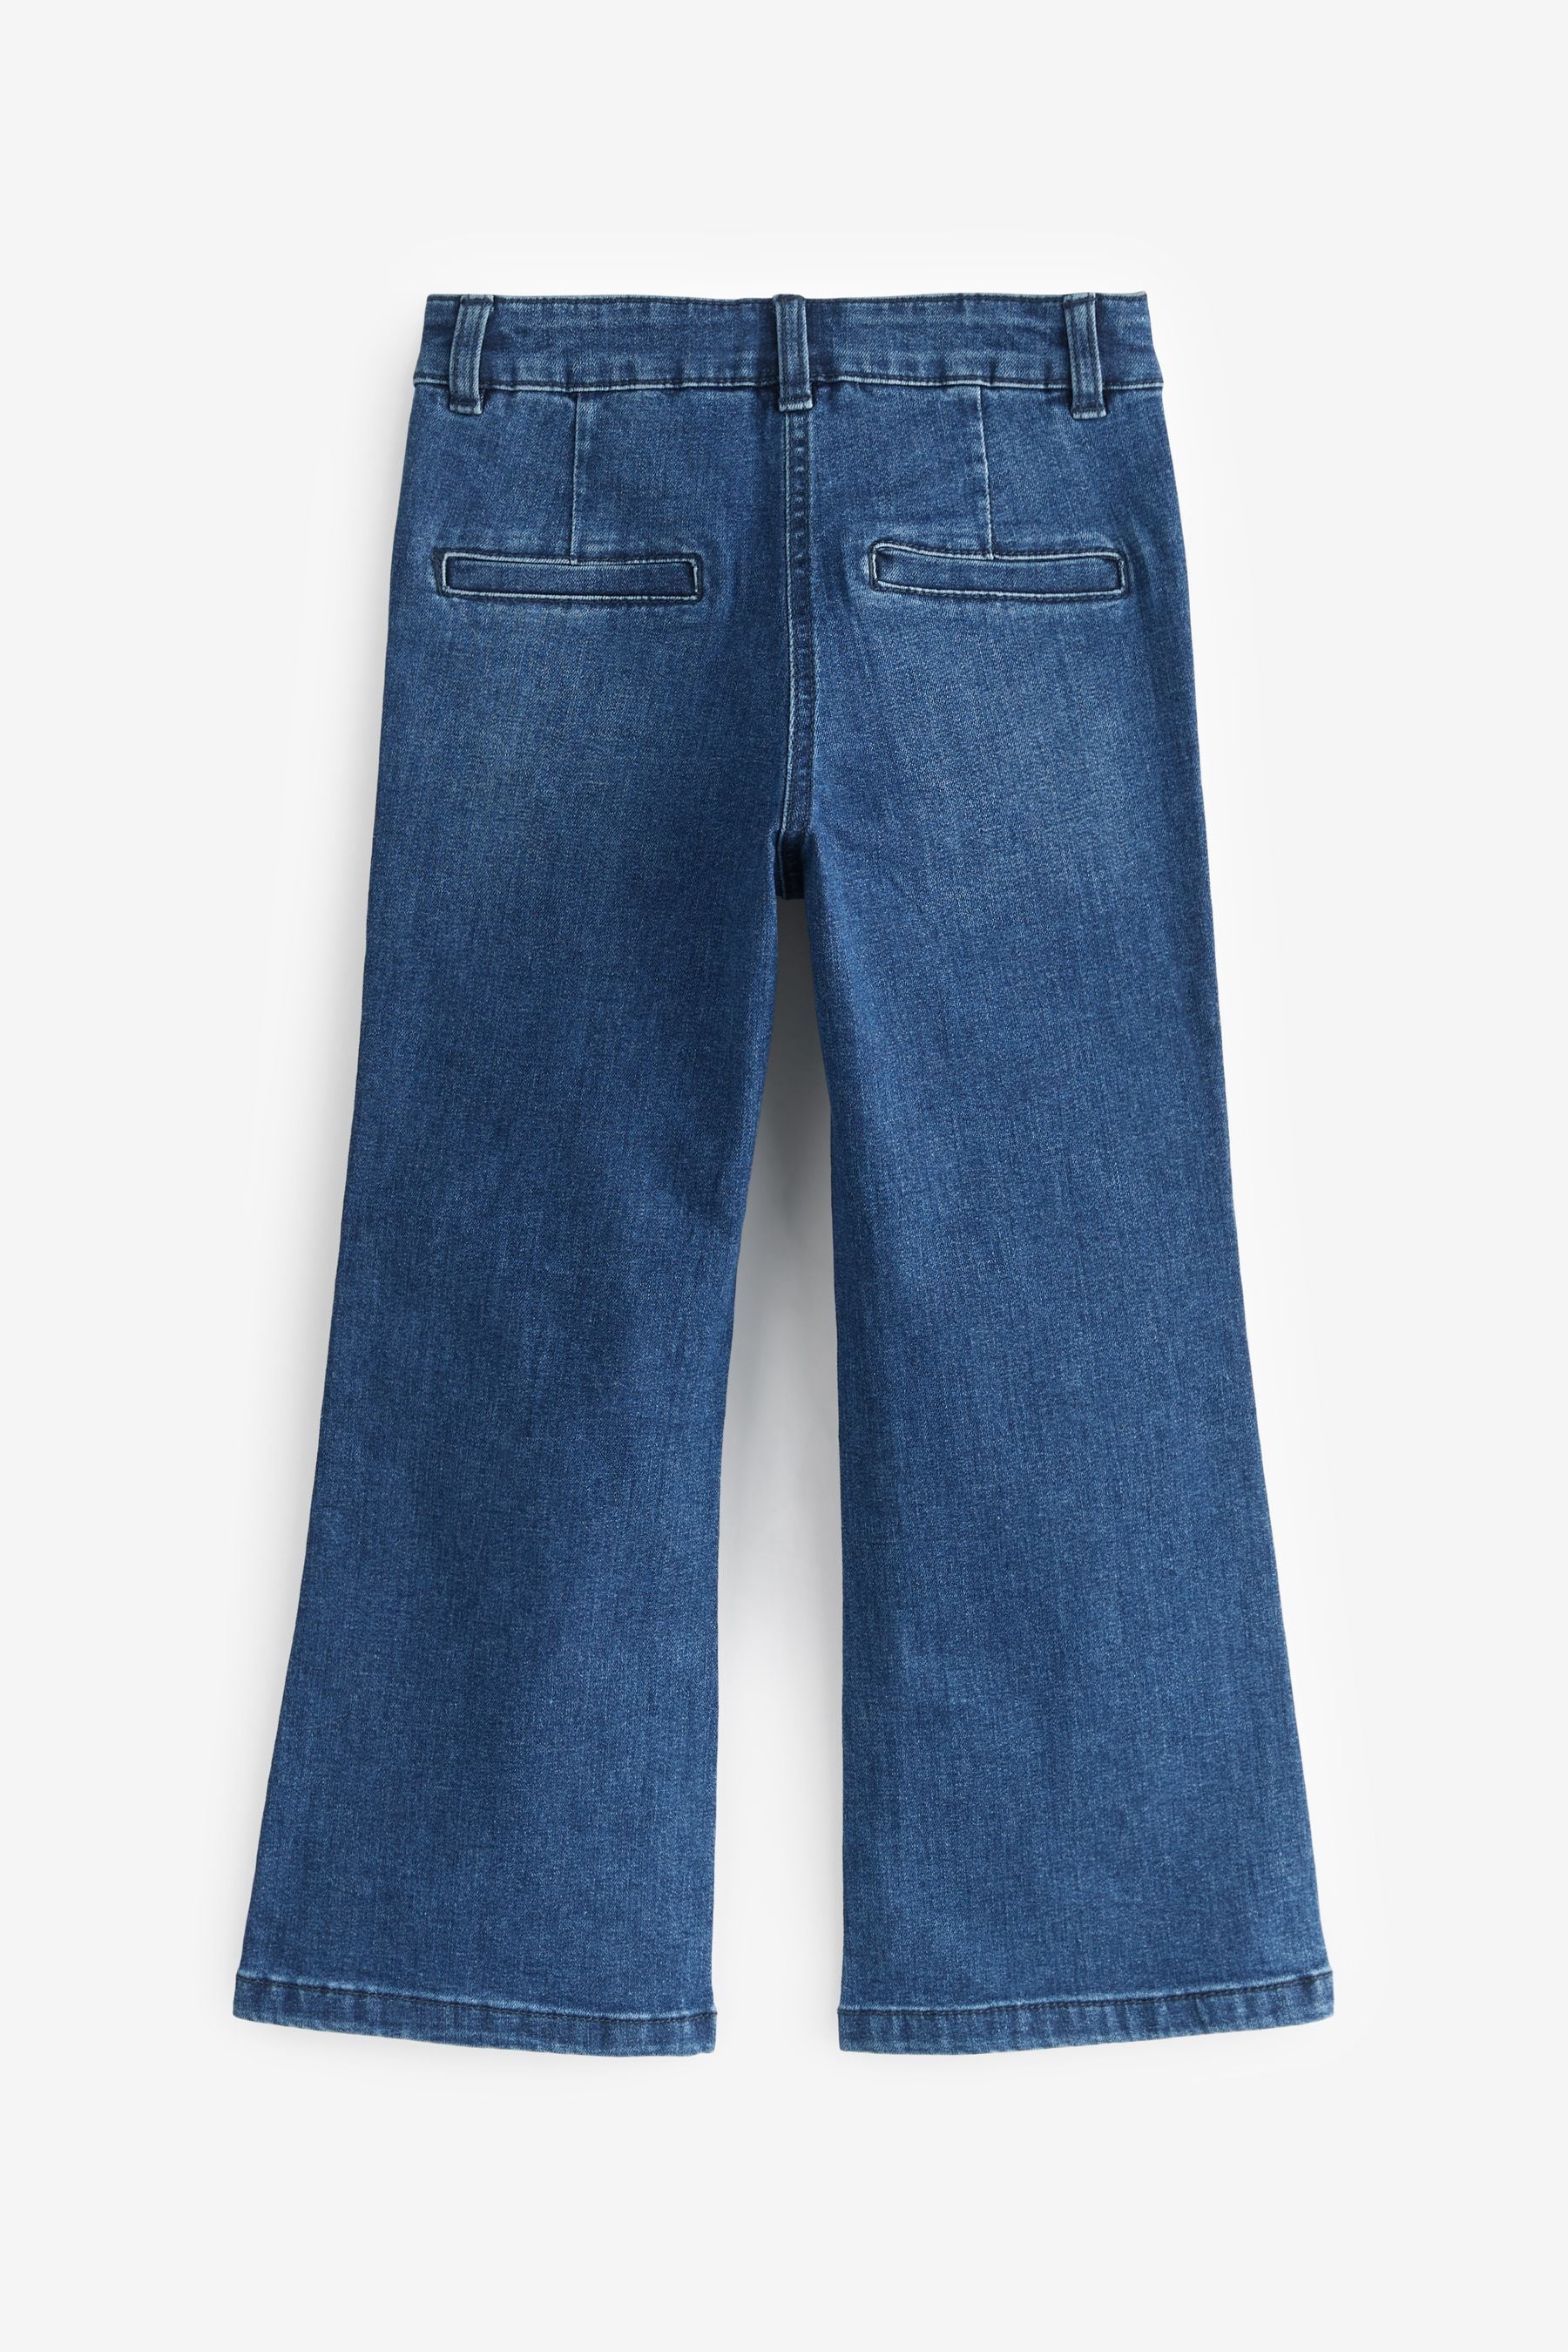 شلوار جینز 20797 سایز 3 تا 13 سال مارک NEXT   *